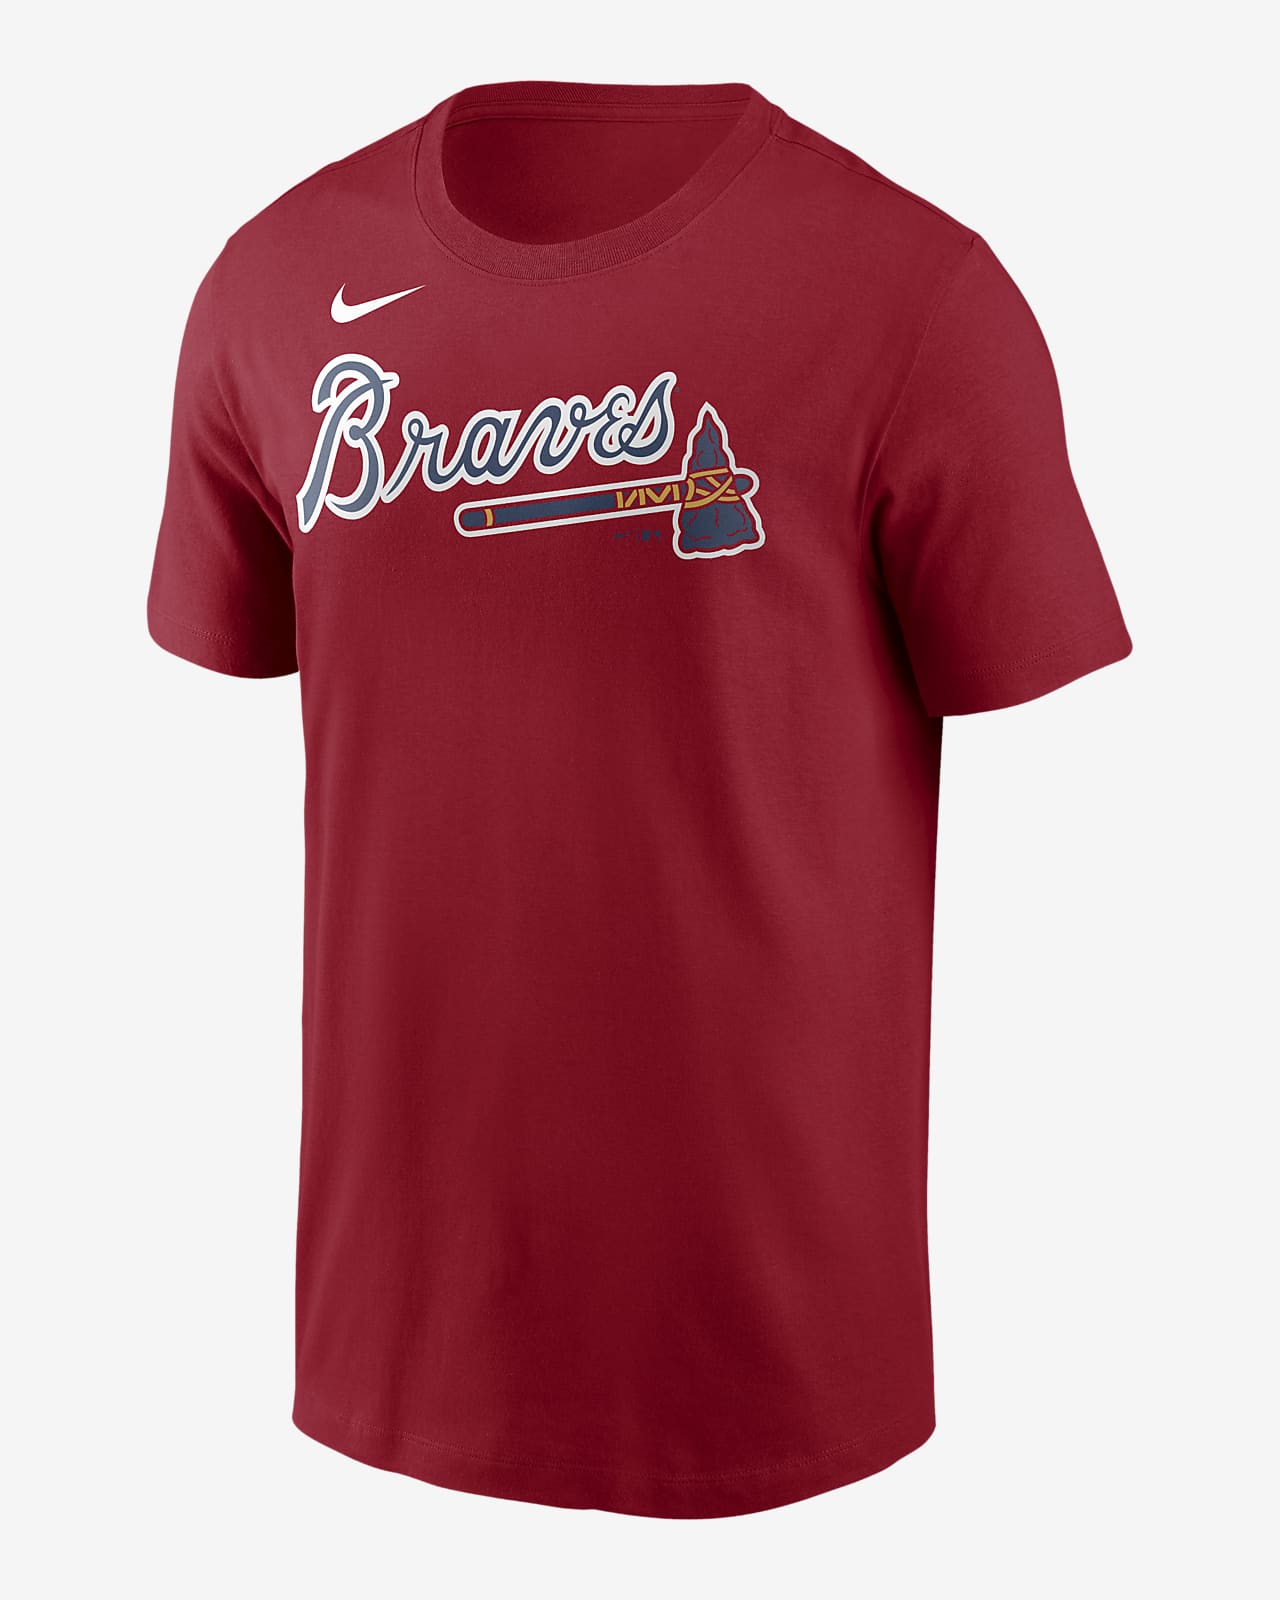 Atlanta Braves Country T shirt - Cheap Custom Made T shirts by